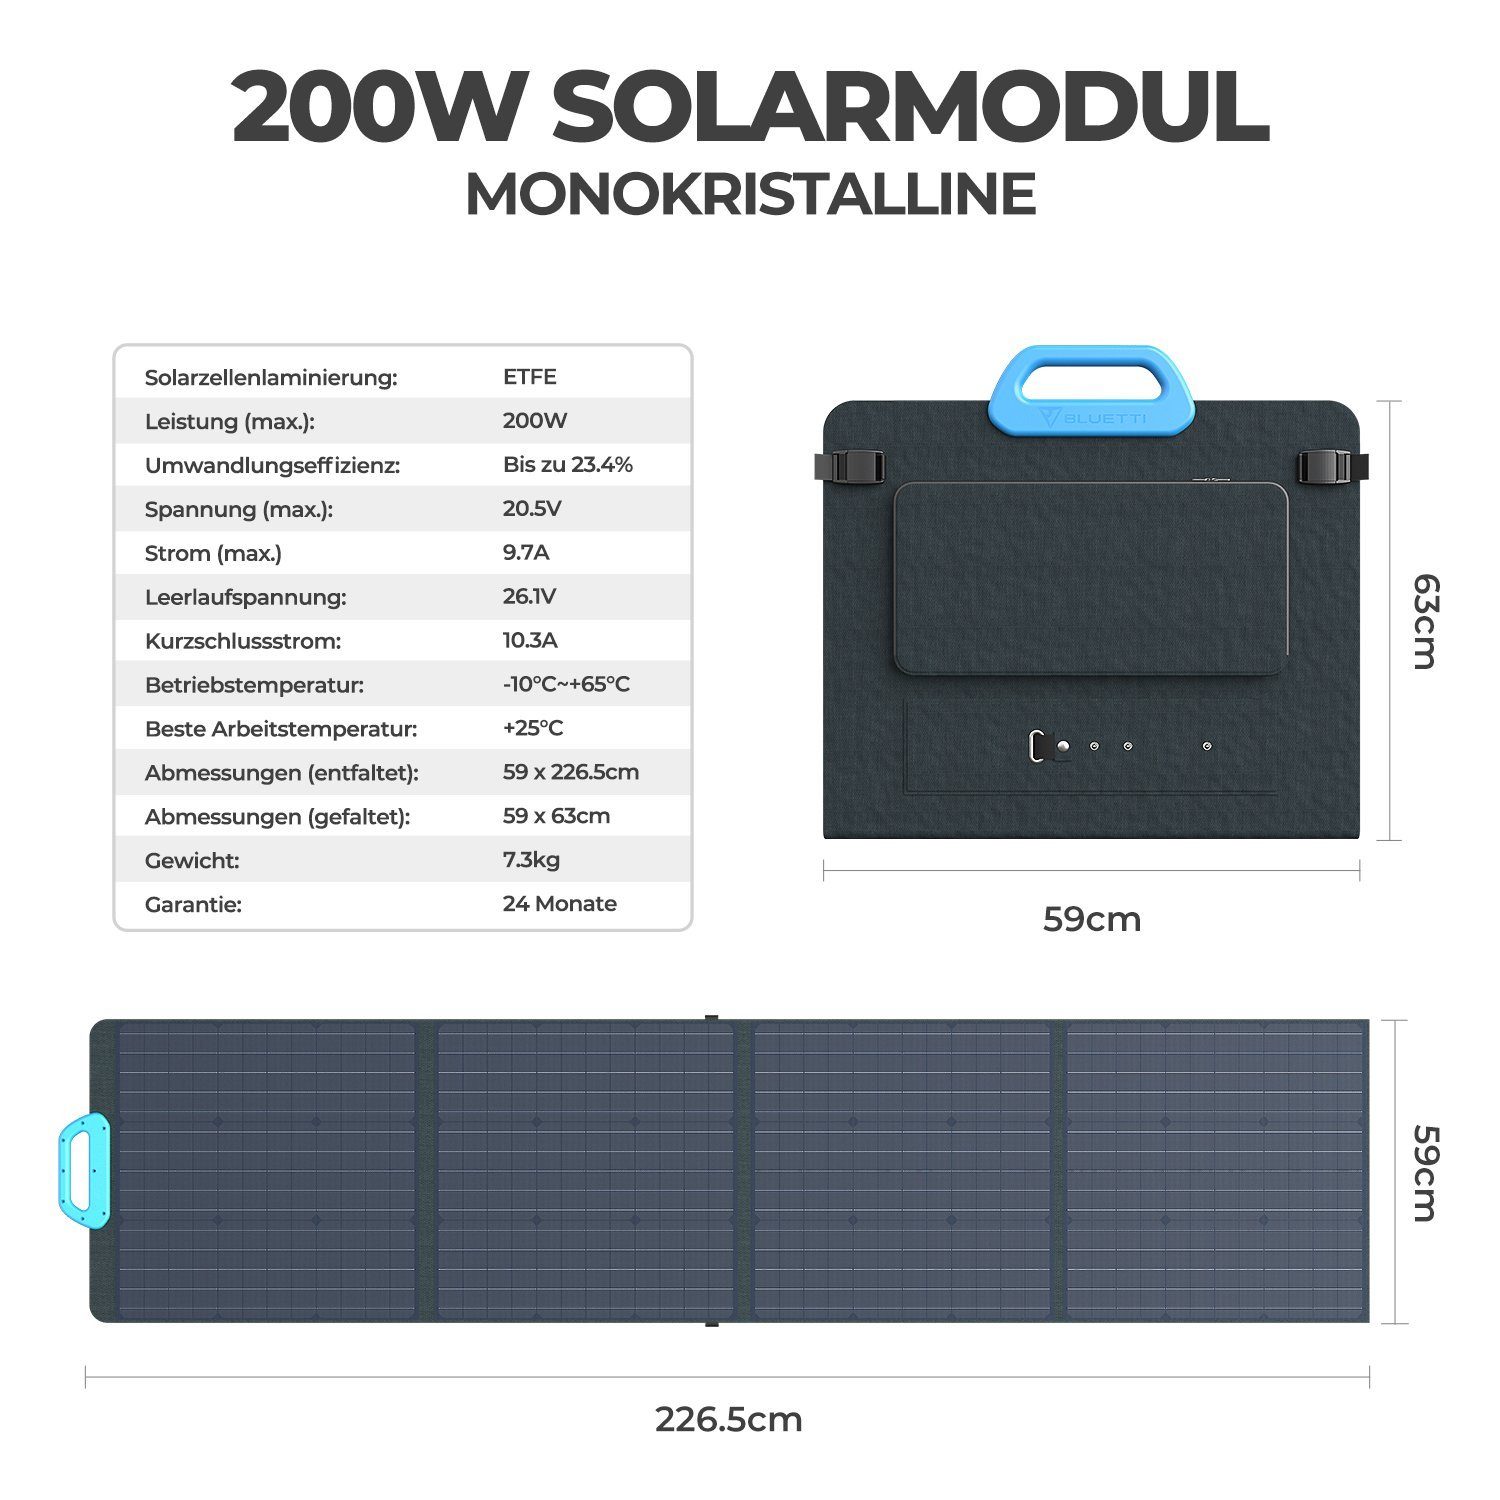 2,00 in kW, +3 BLUETTI 2000Wh/2000W AC200P Stromerzeuger Solarpanel, 200W (3-tlg),